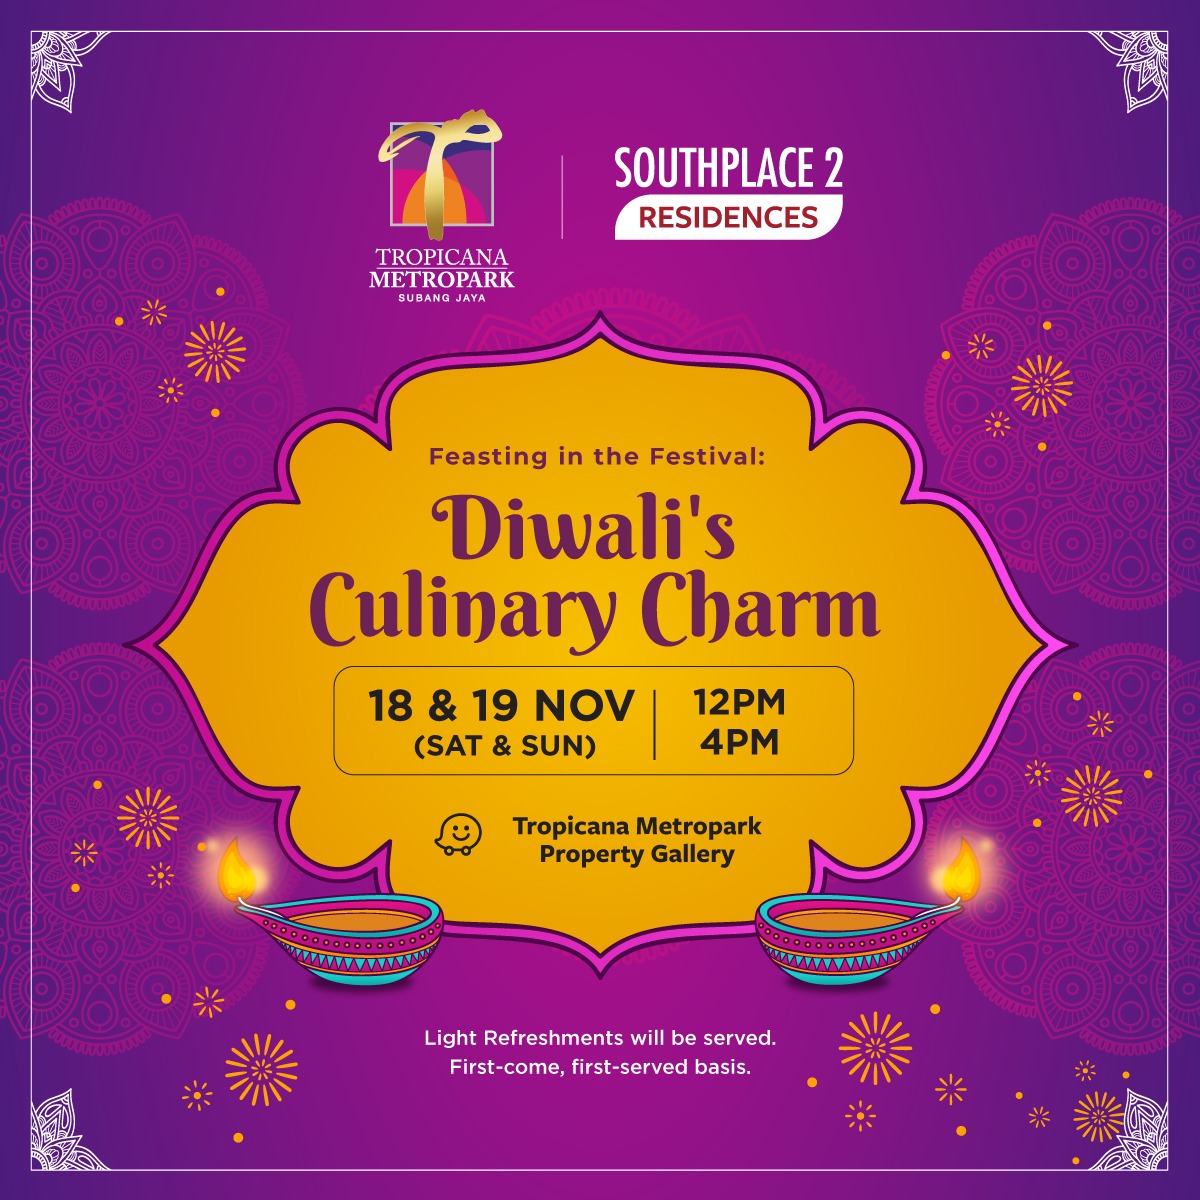 Diwali's Culinary Charm